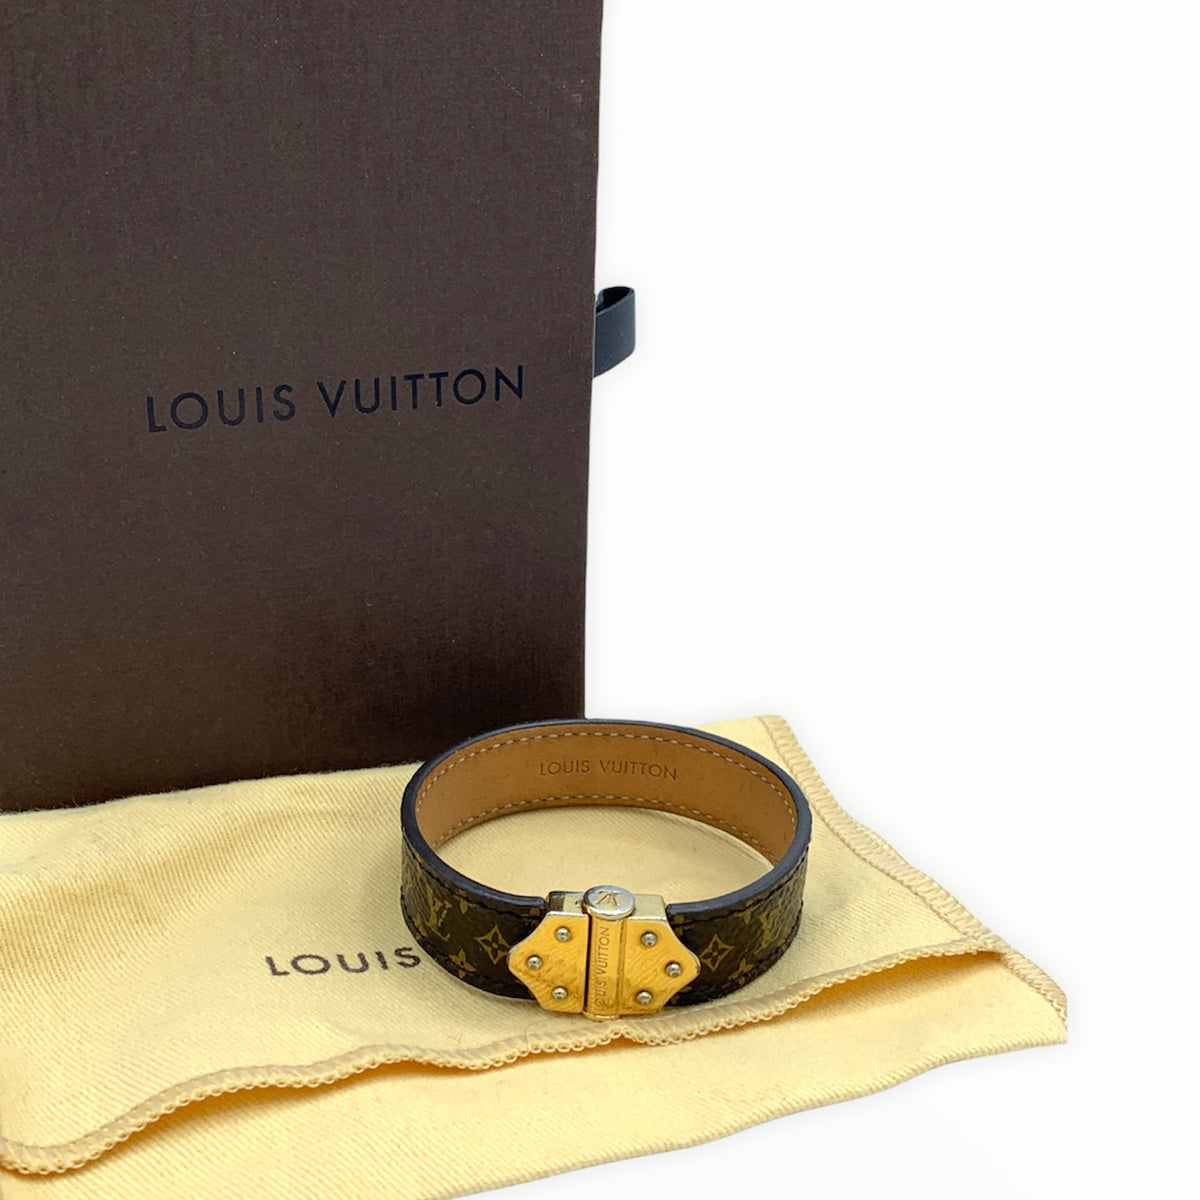 Sold at Auction: Louis Vuitton, LOUIS VUITTON Armband NANO MONOGRAM.